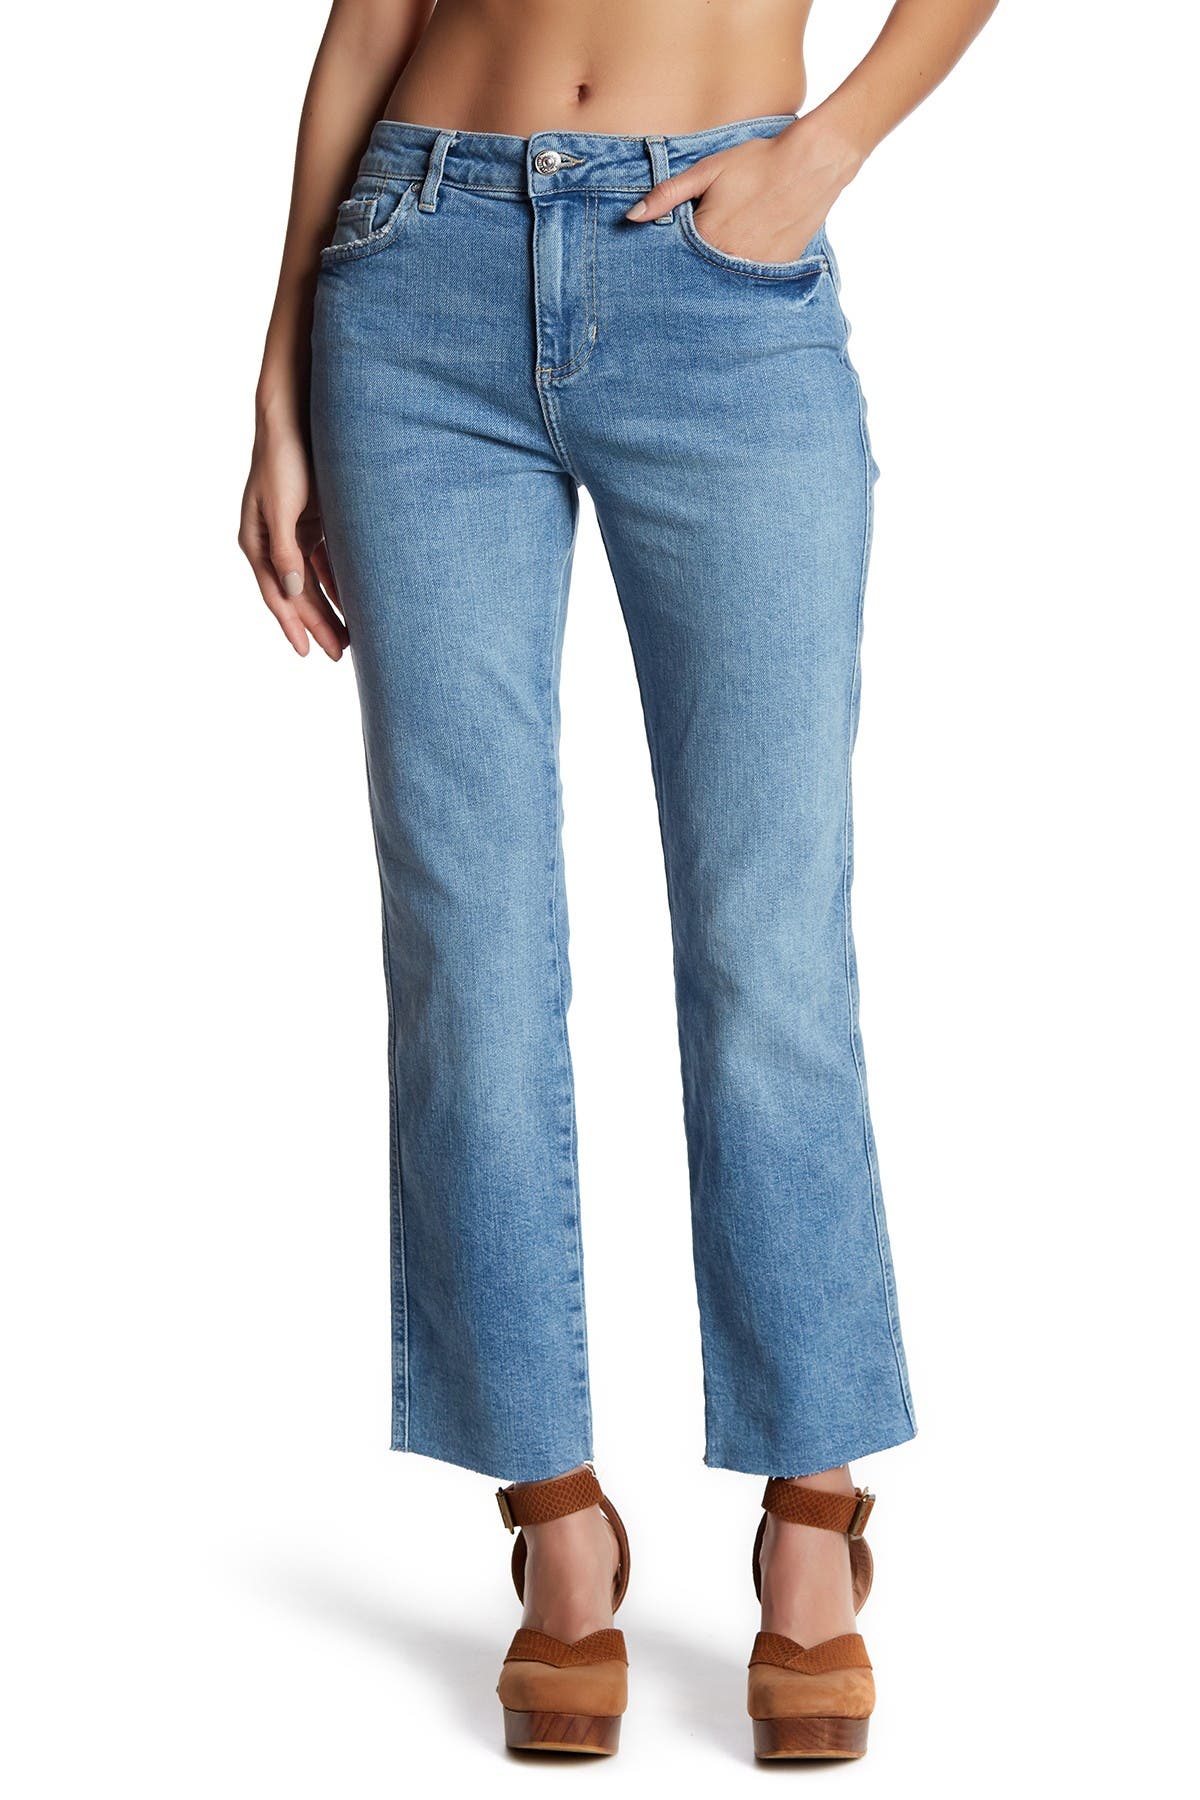 nordstrom girlfriend jeans